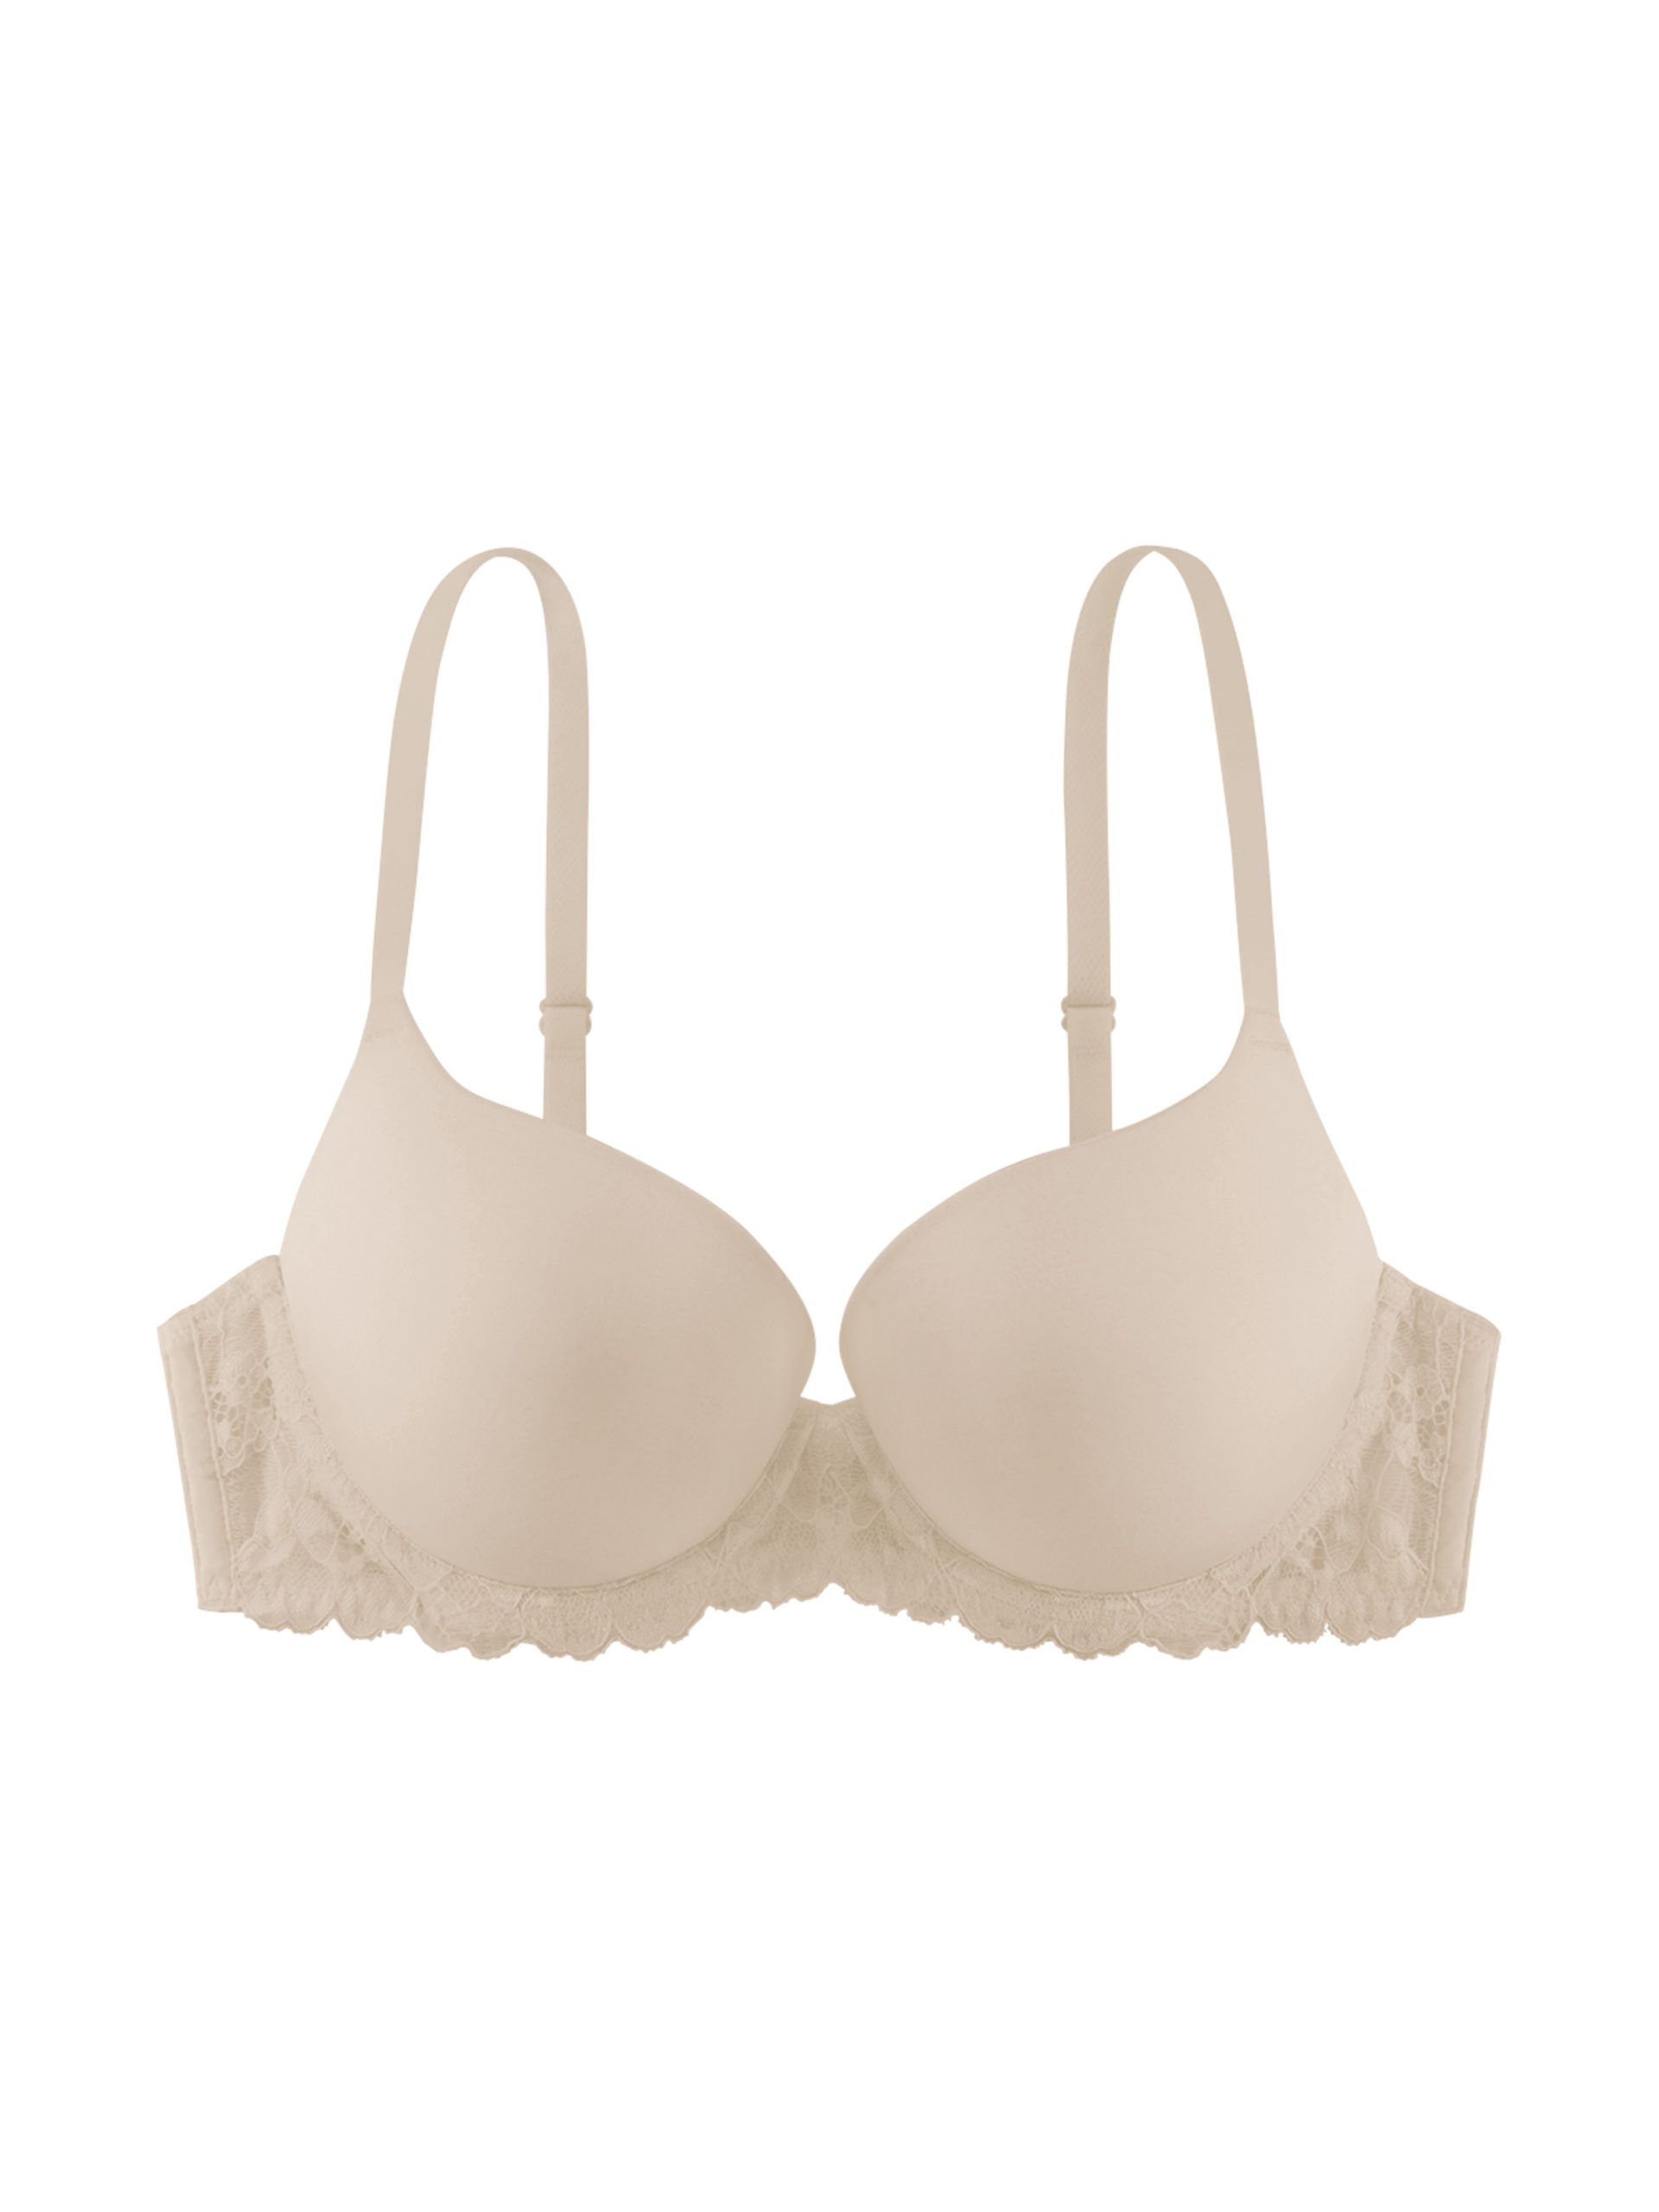 DORINA CLAIRE - Push-up bra - ivory/off-white 